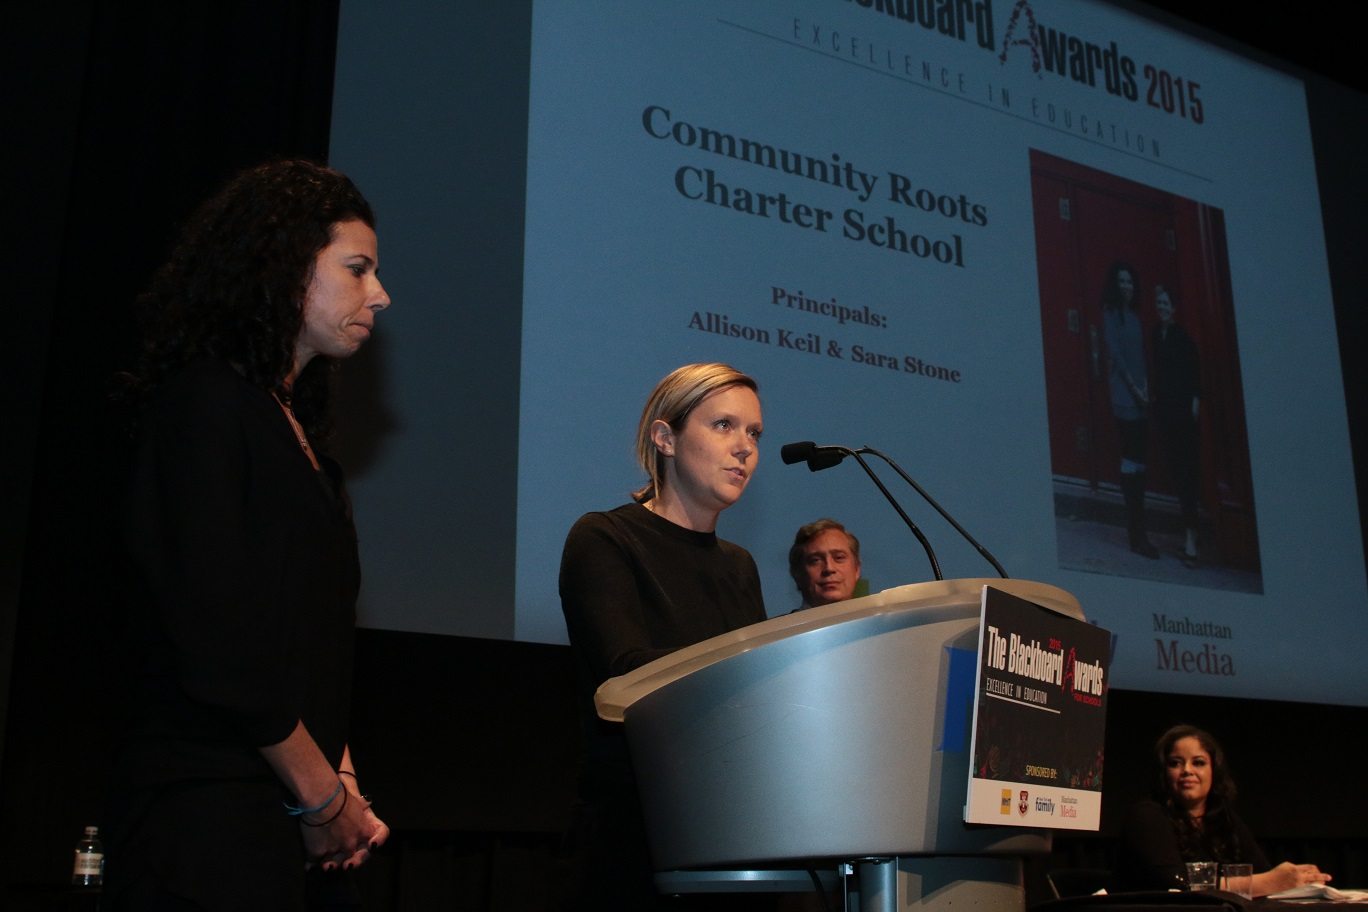 Allison Keil and Sara Stone, Princiapls, Community Roots Charter School